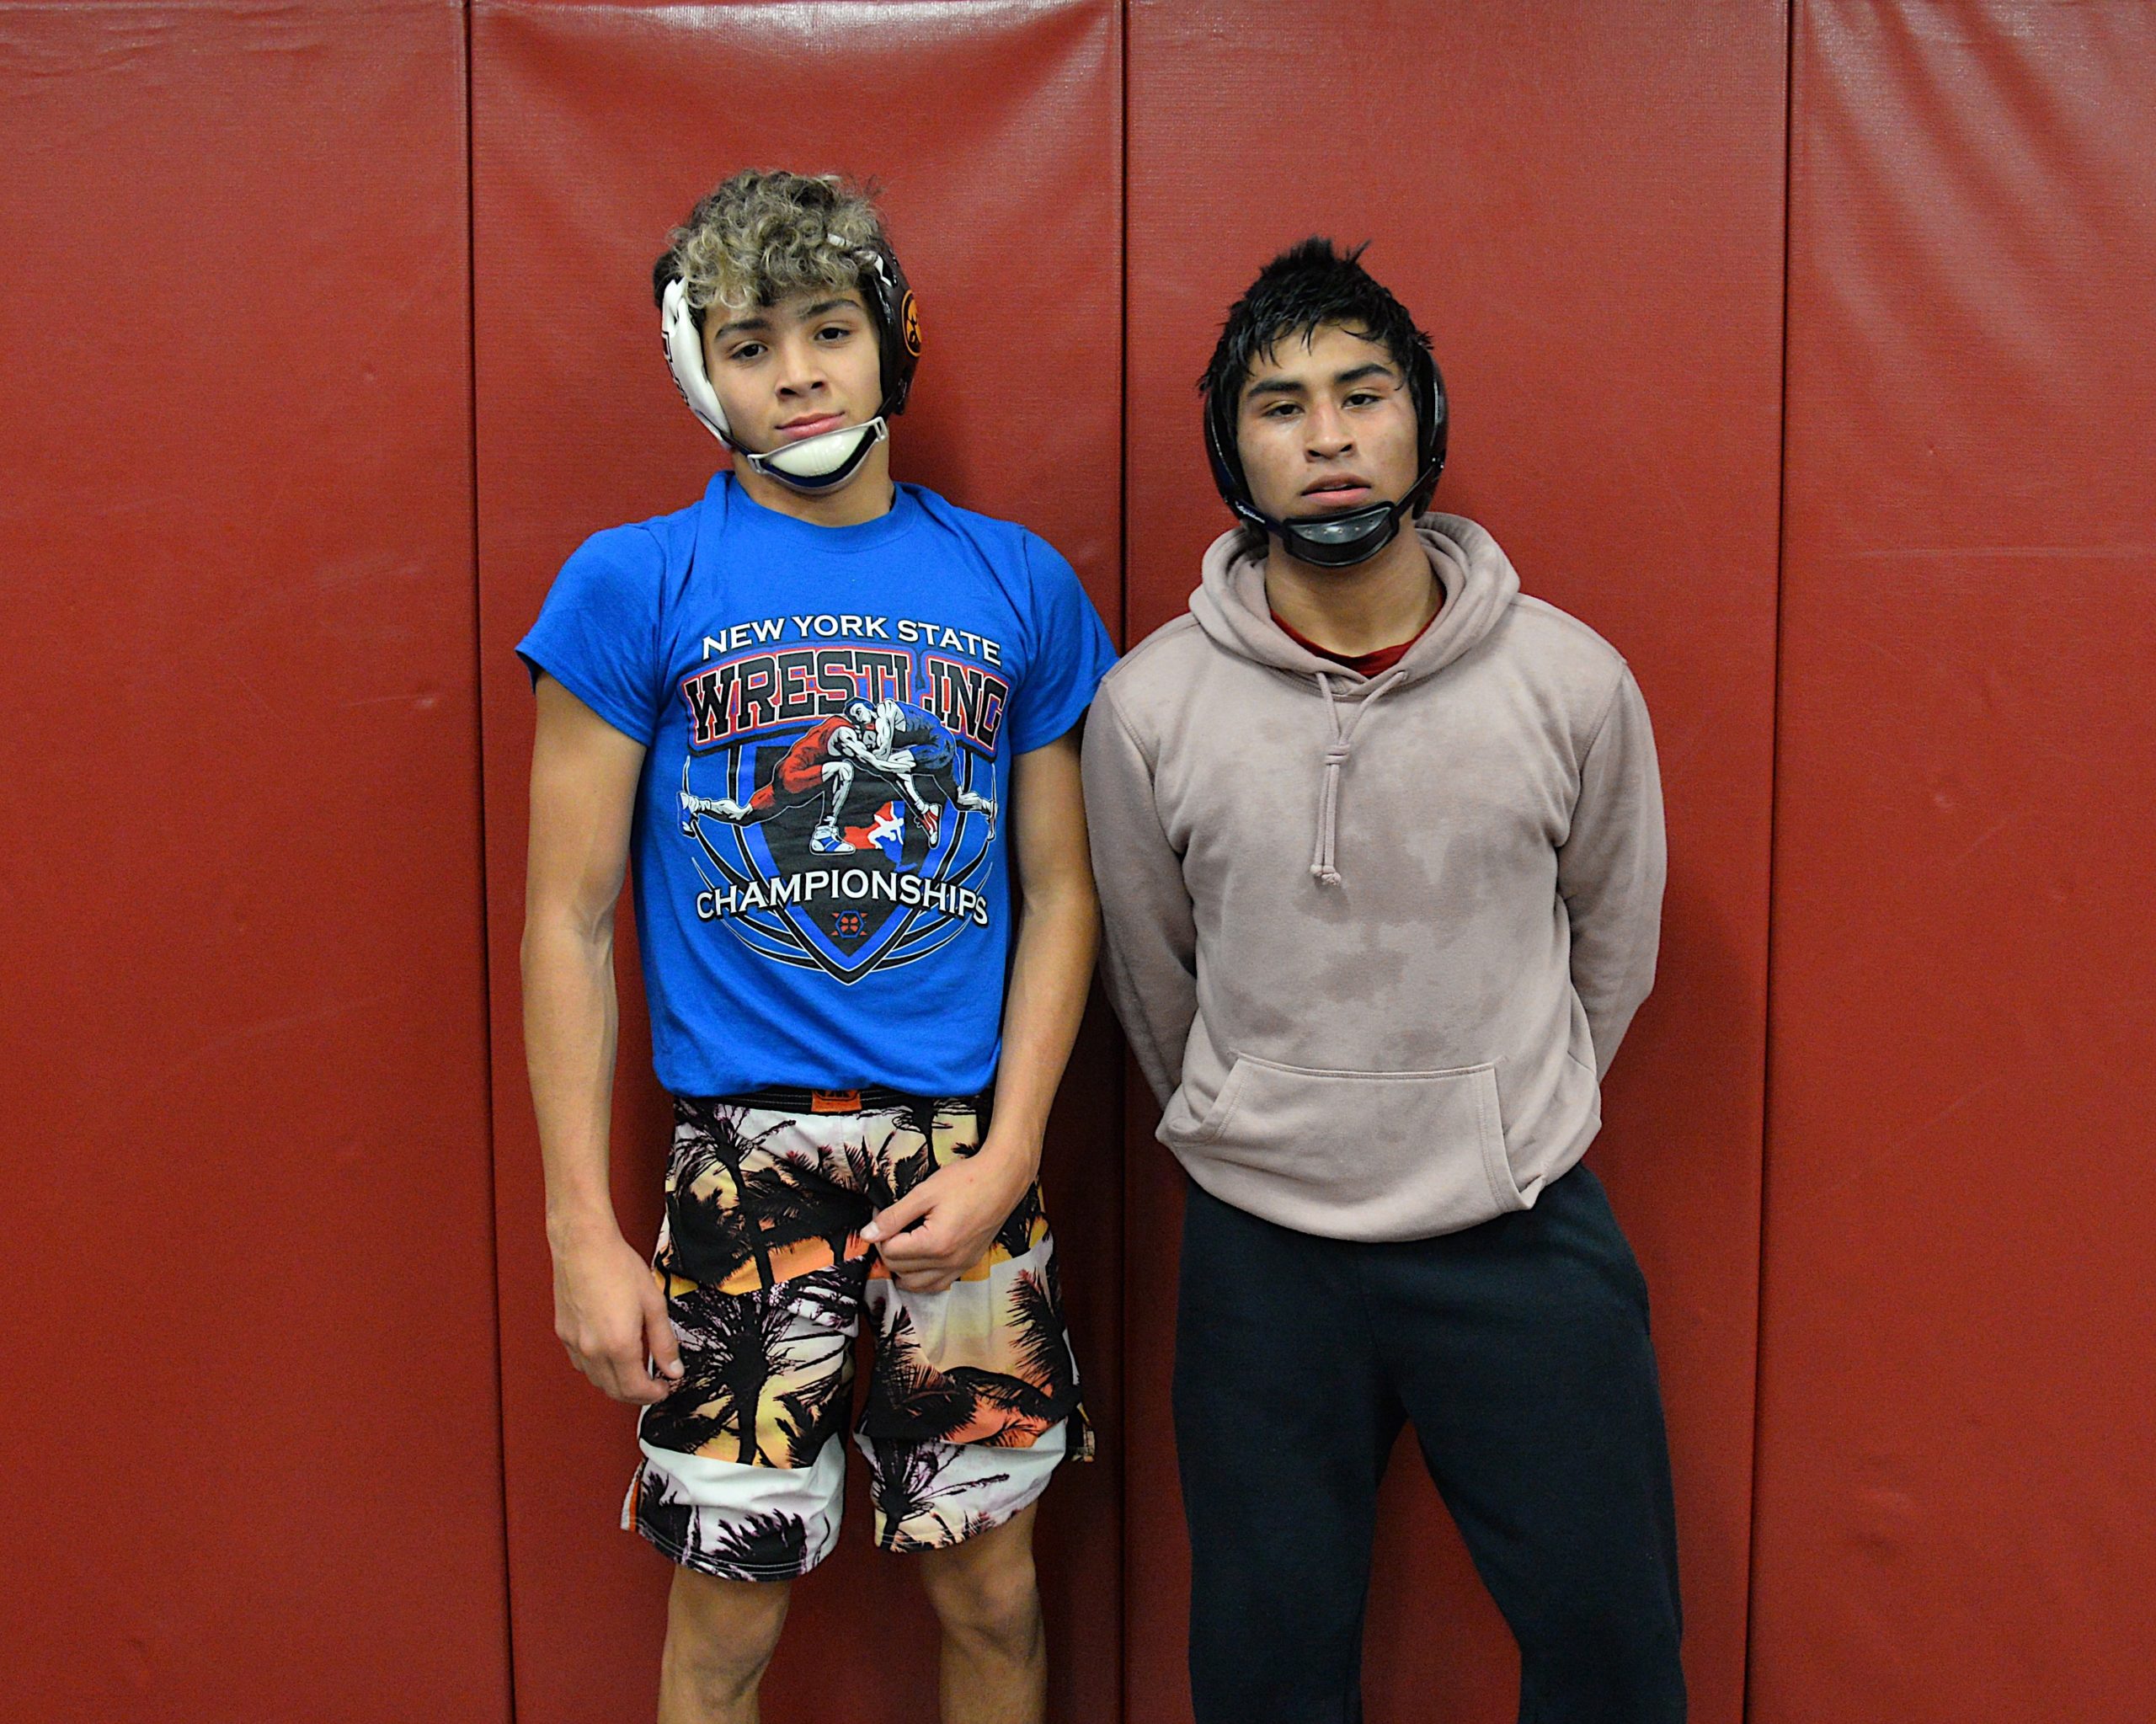 Returning sophomores Santi Maya, left, and Caleb Peralta will lead the Bonac wrestling team once again this season.